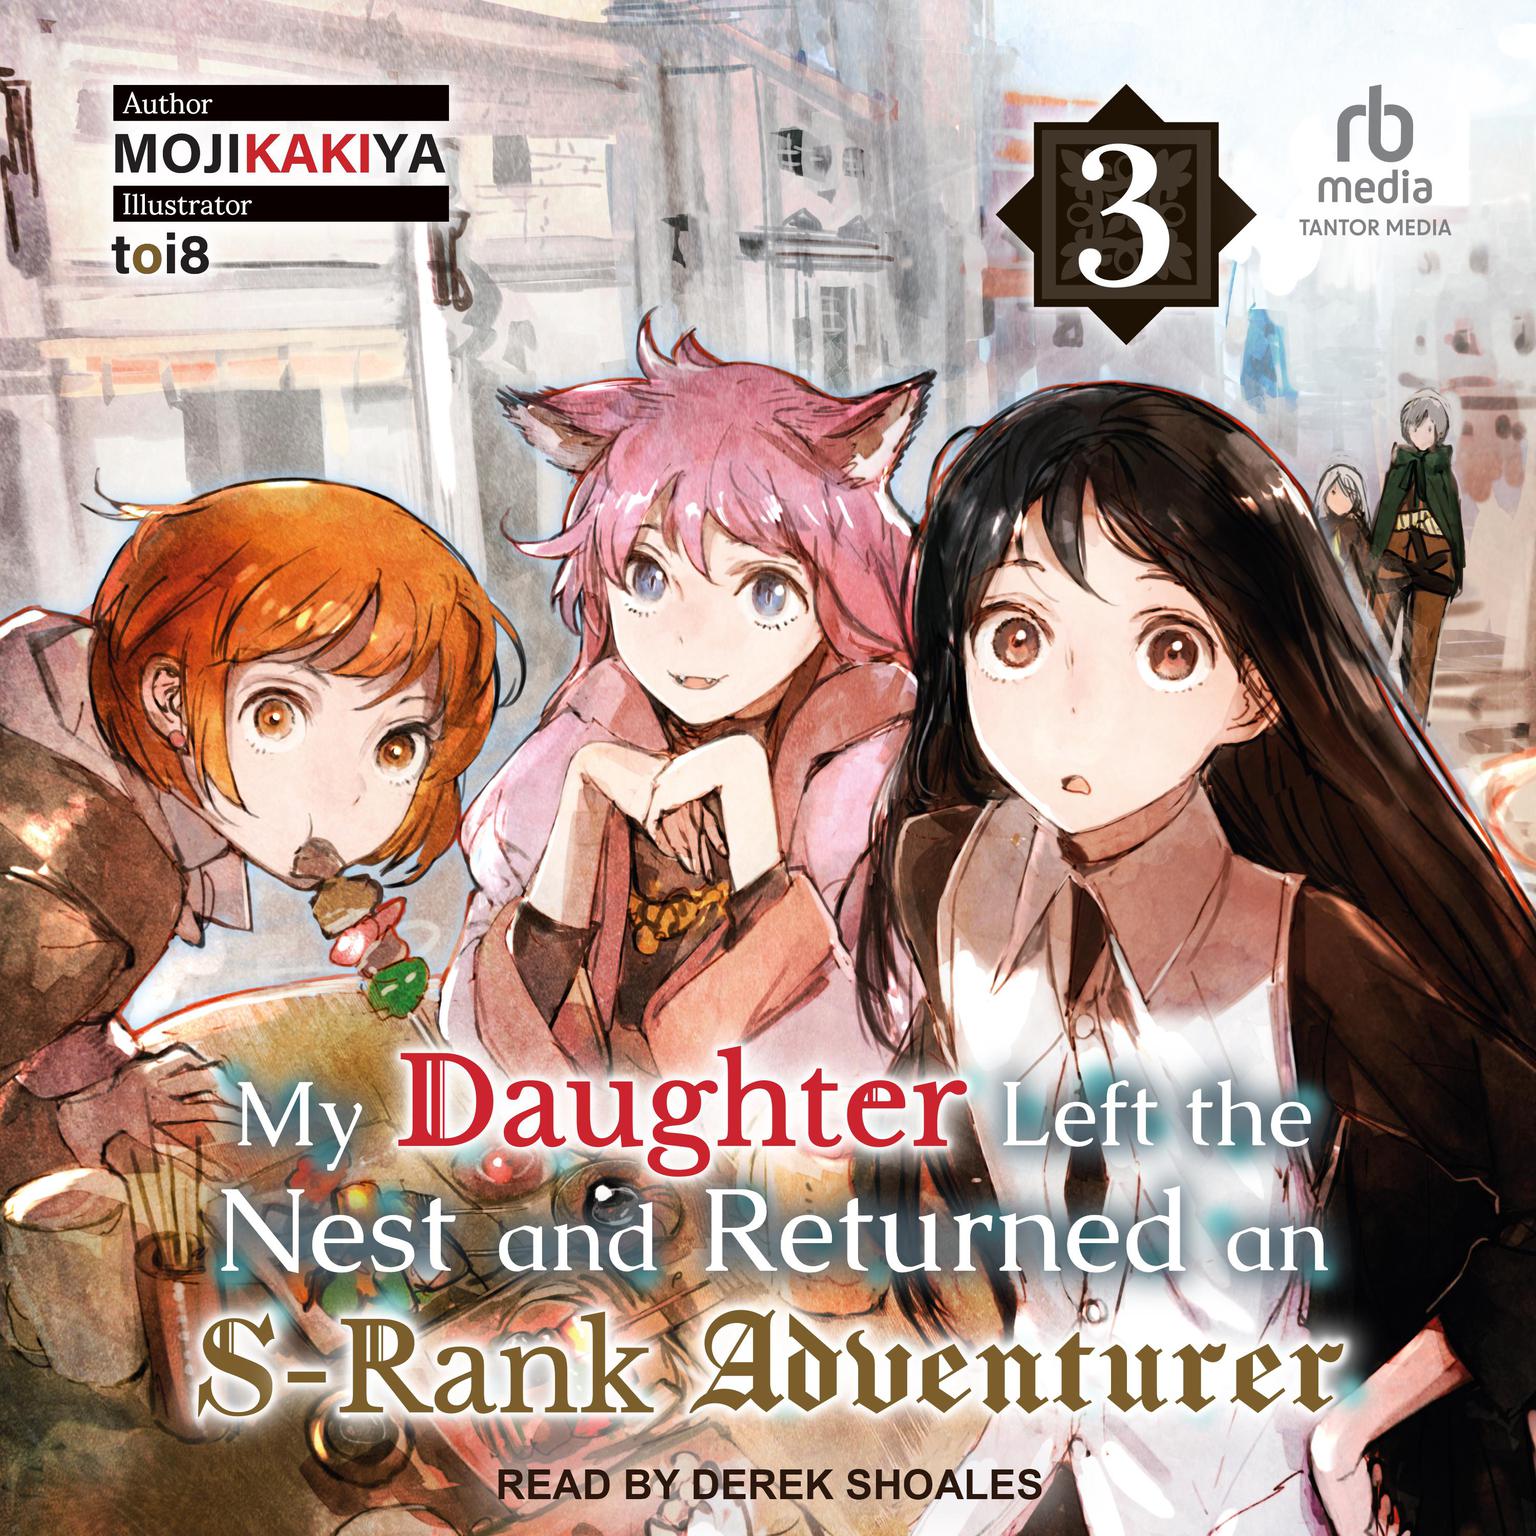 My Daughter Left the Nest and Returned an S-Rank Adventurer: Volume 3 Audiobook, by MOJIKAKIYA 